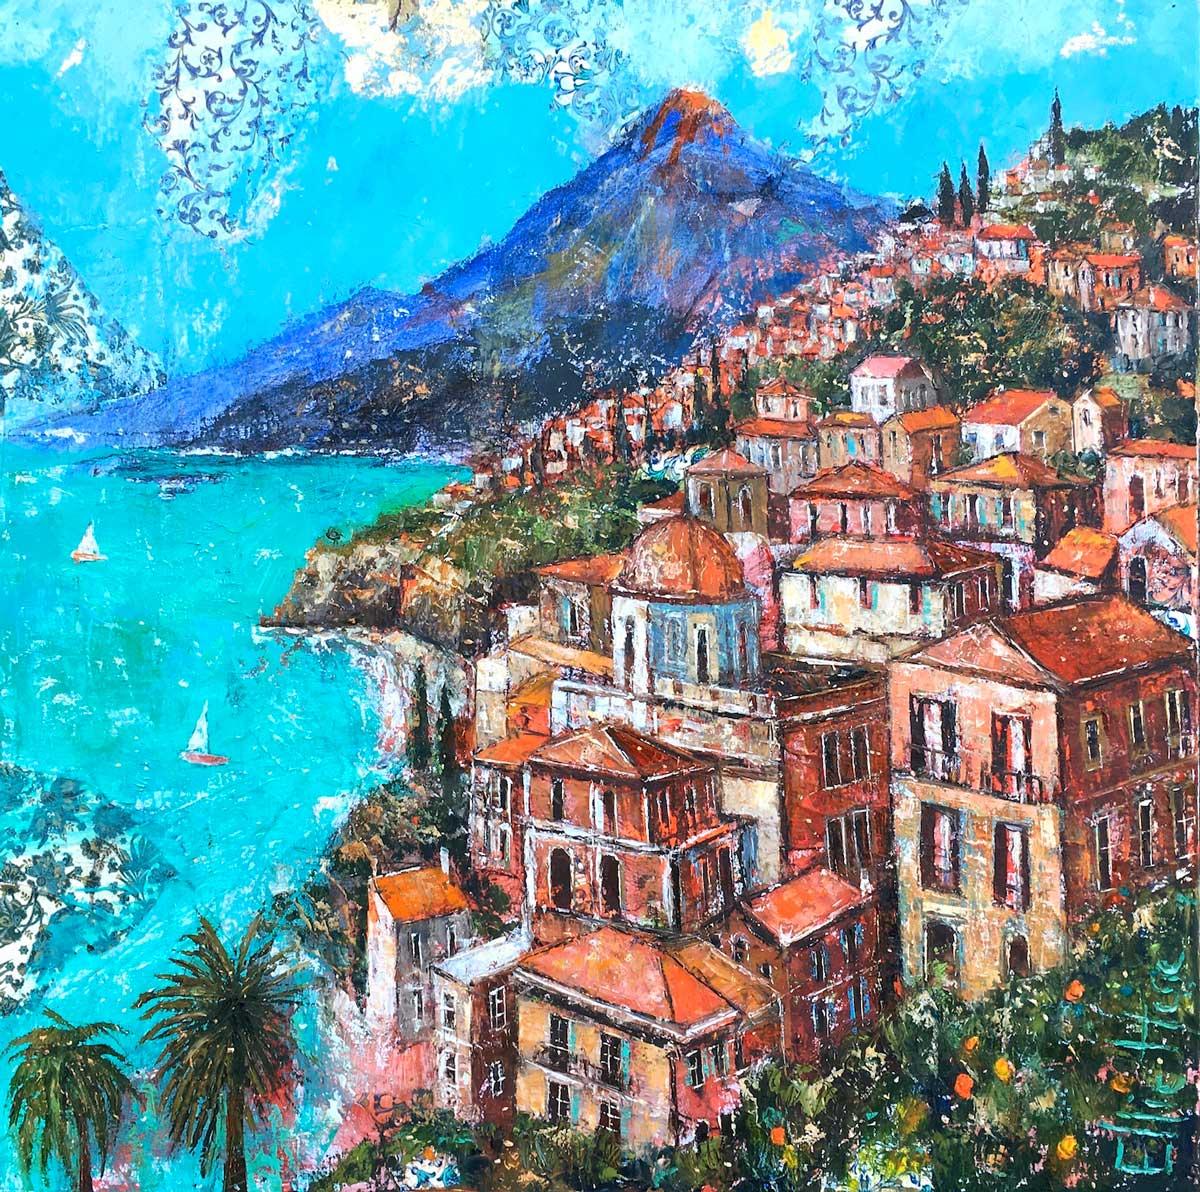 Taormina, Sicily - contemporary landscape colourful mixed media painting